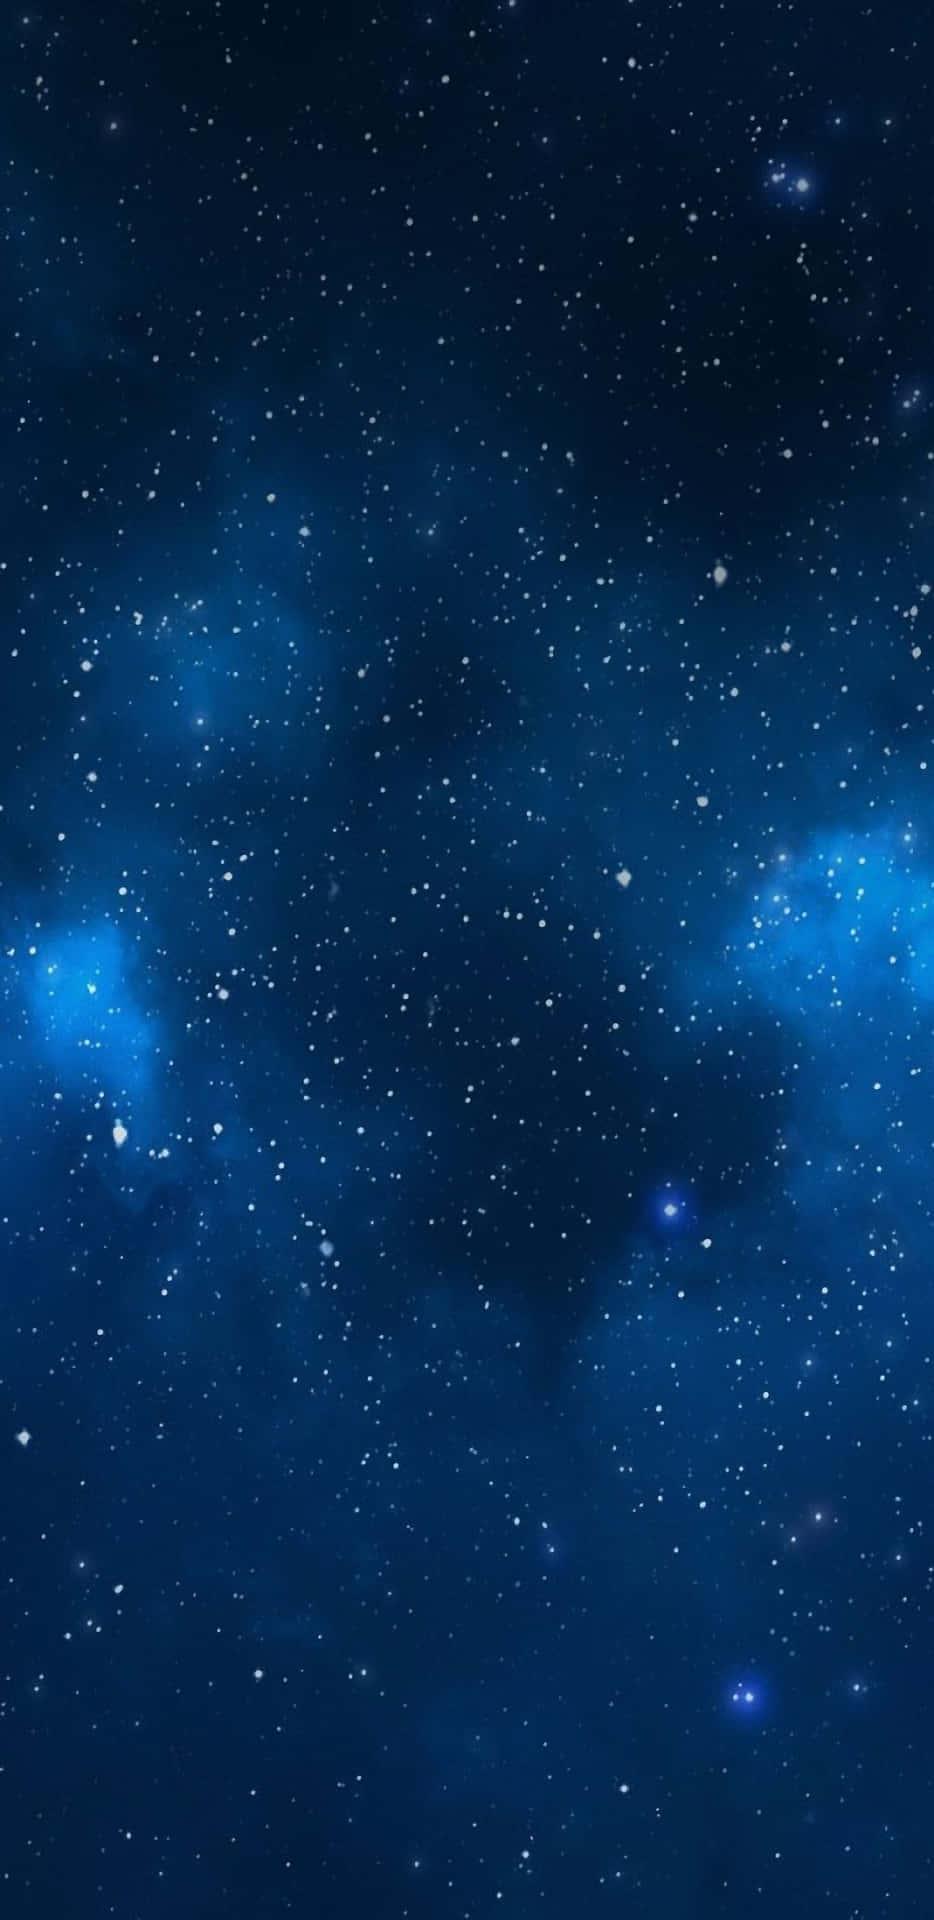 Pale Gas Cloud In Galaxy Blue Aesthetic Wallpaper